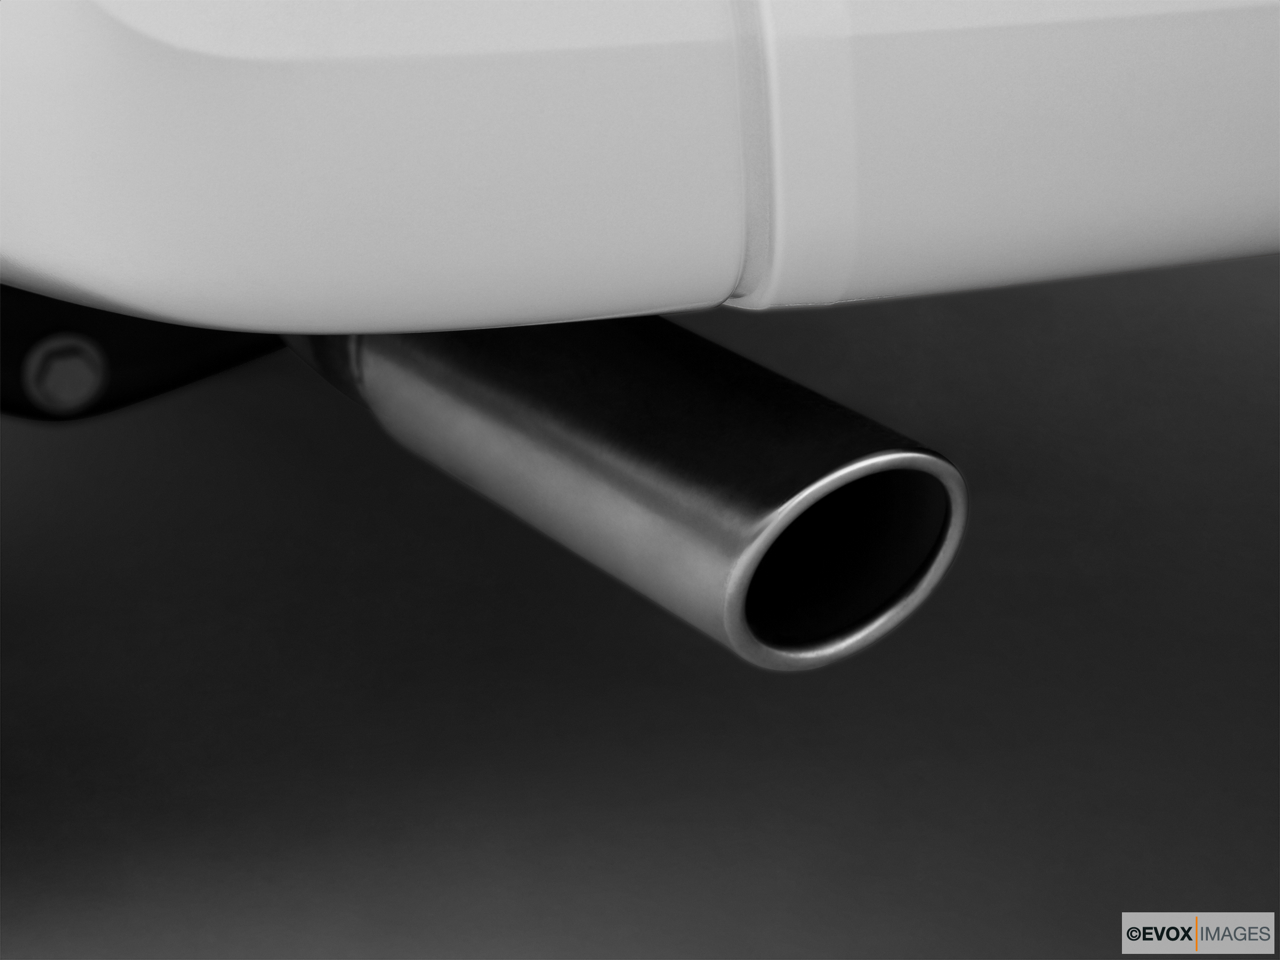 2010 Mercury Mountaineer Premier Chrome tip exhaust pipe. 